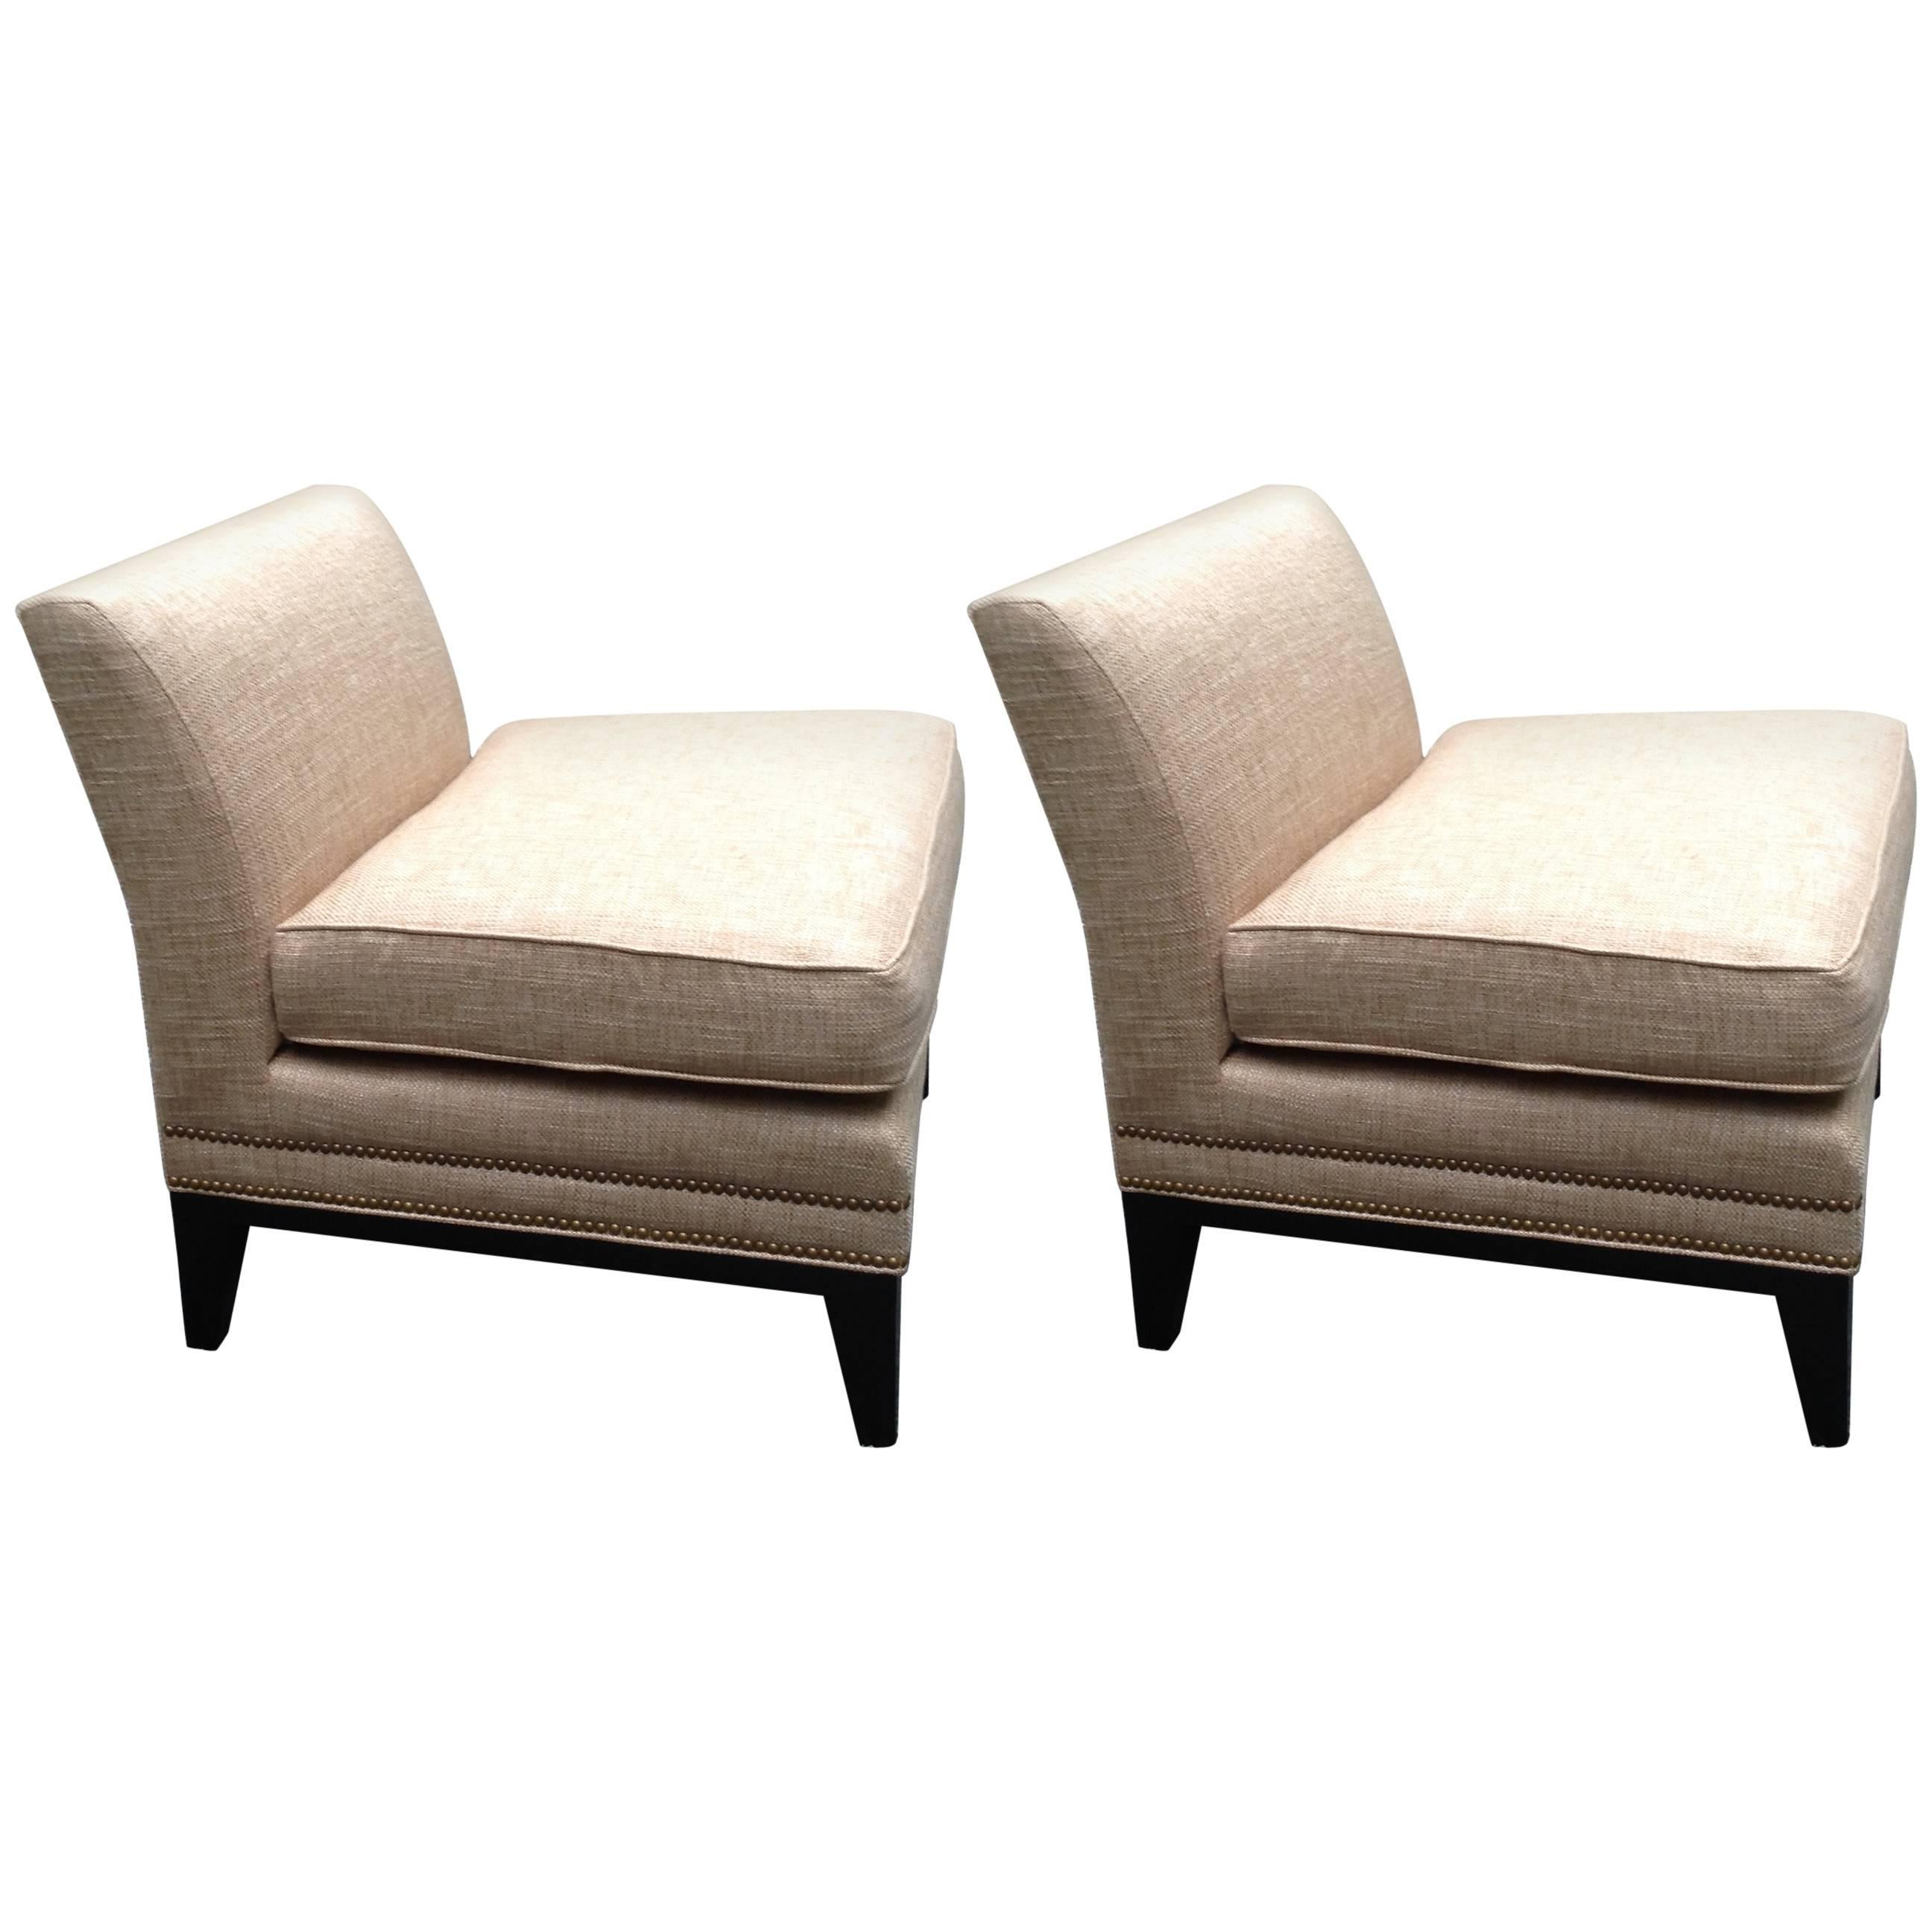 Pair of Mid-Century Modern Slipper Chairs